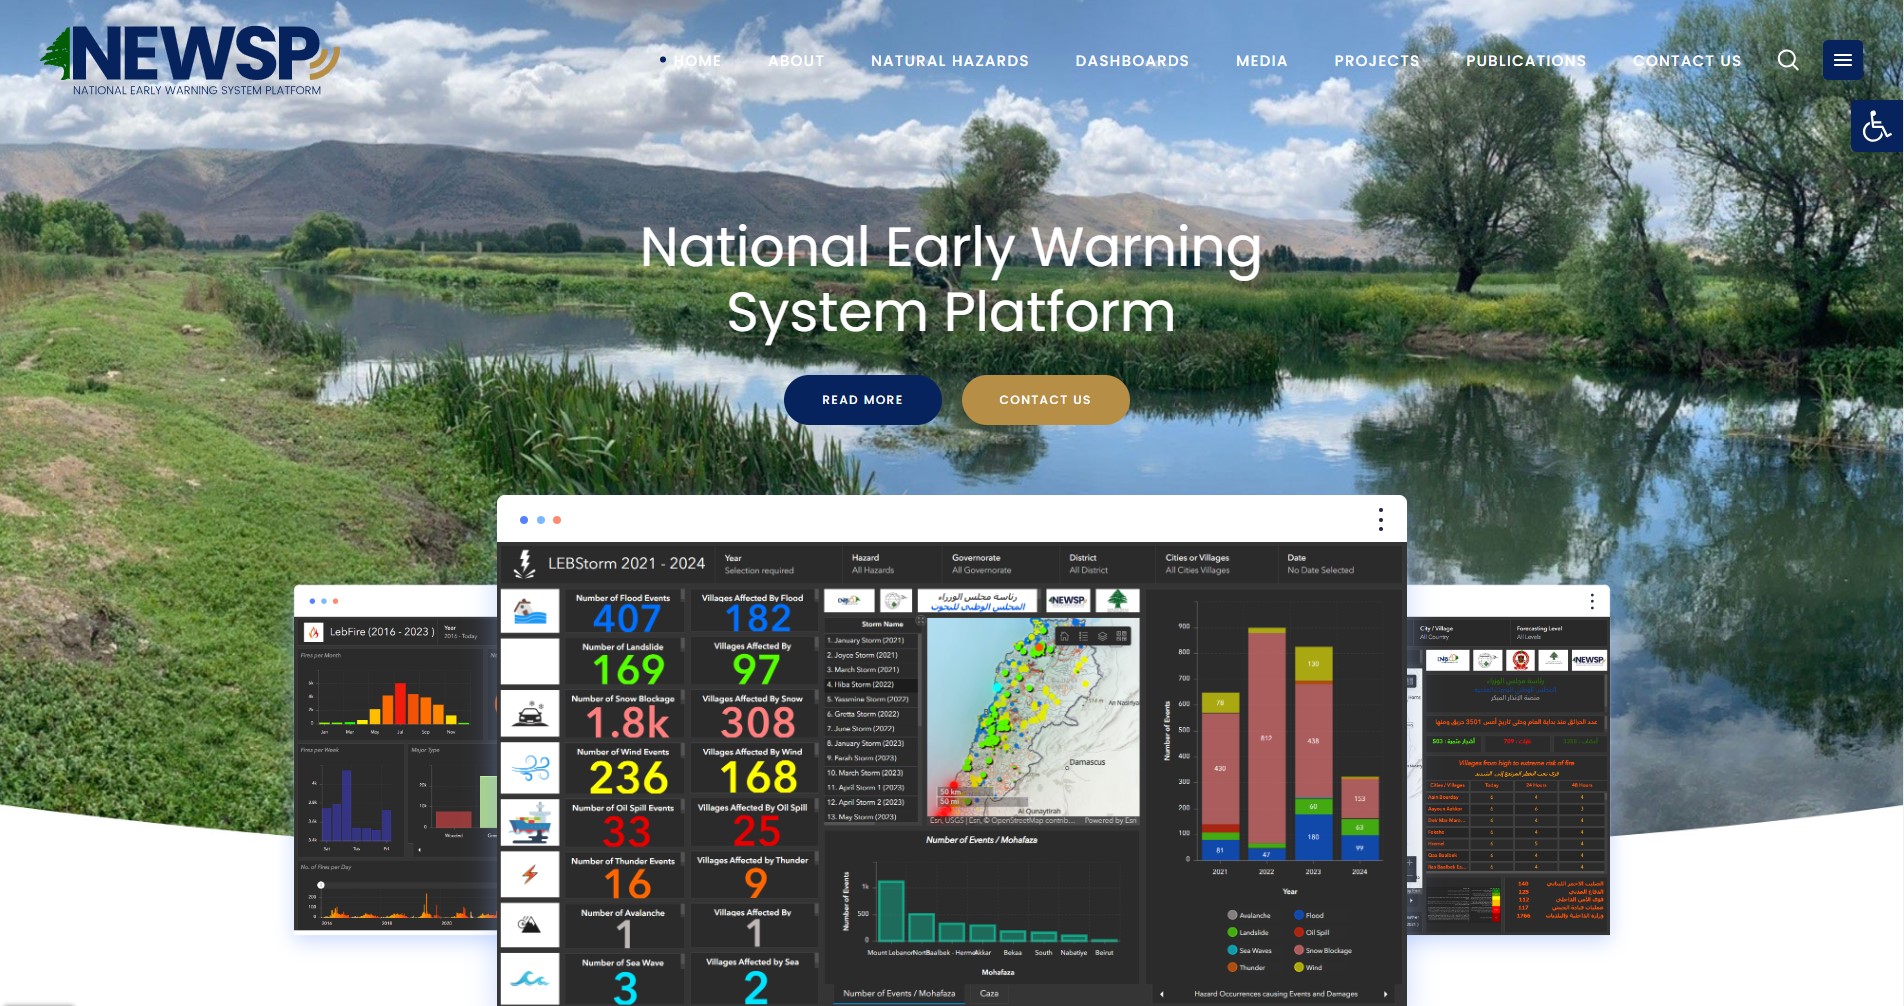 National Early Warning System Platform